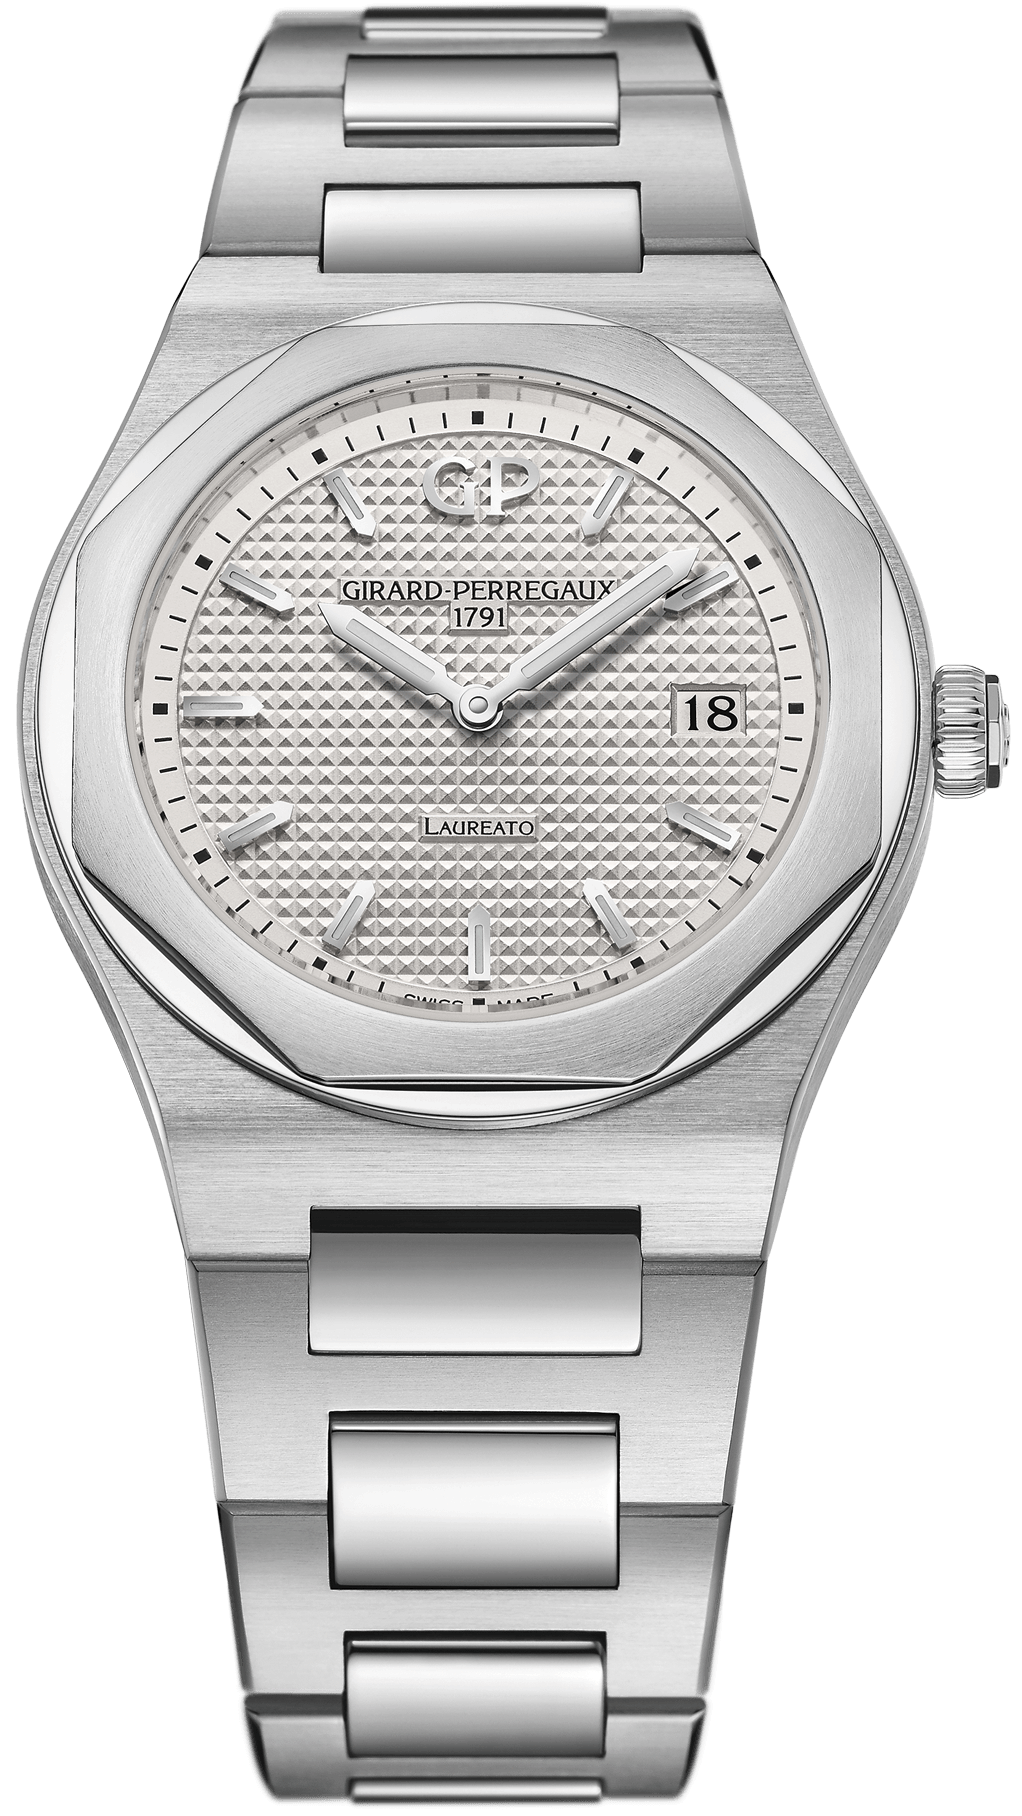 Girard-Perregaux 80189-11-131-11A (801891113111a) - Laureato 34 mm